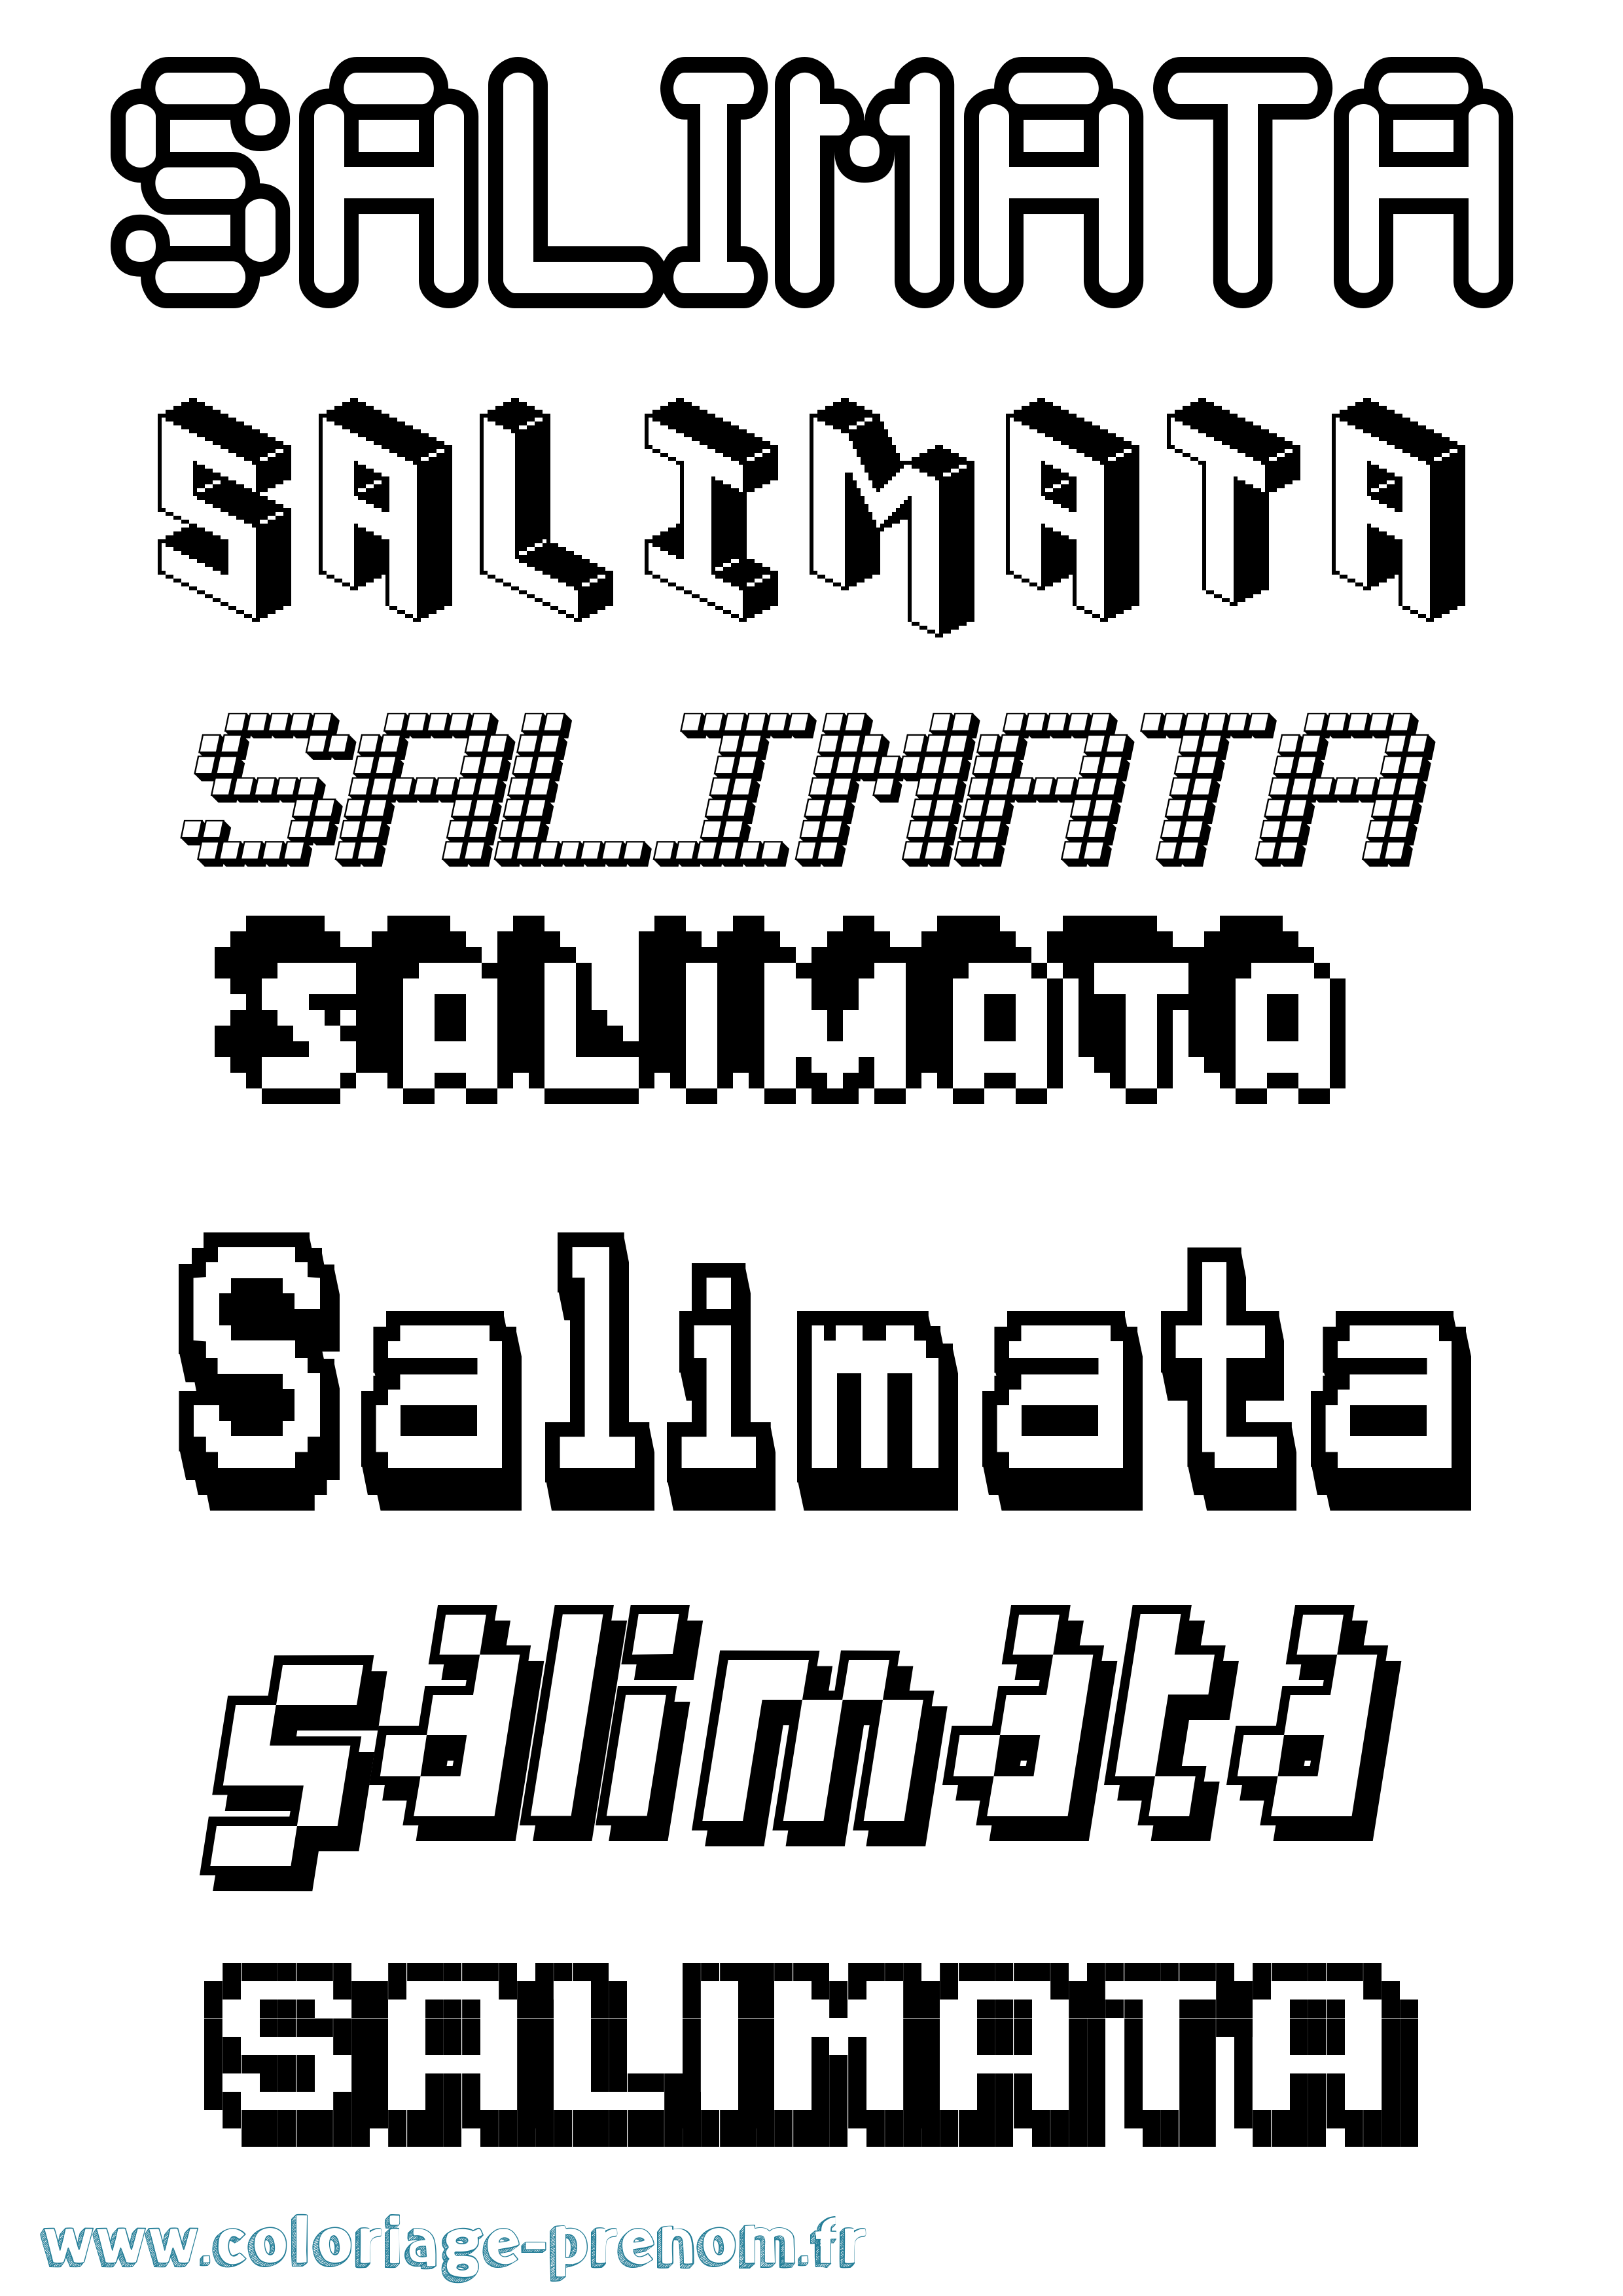 Coloriage prénom Salimata Pixel